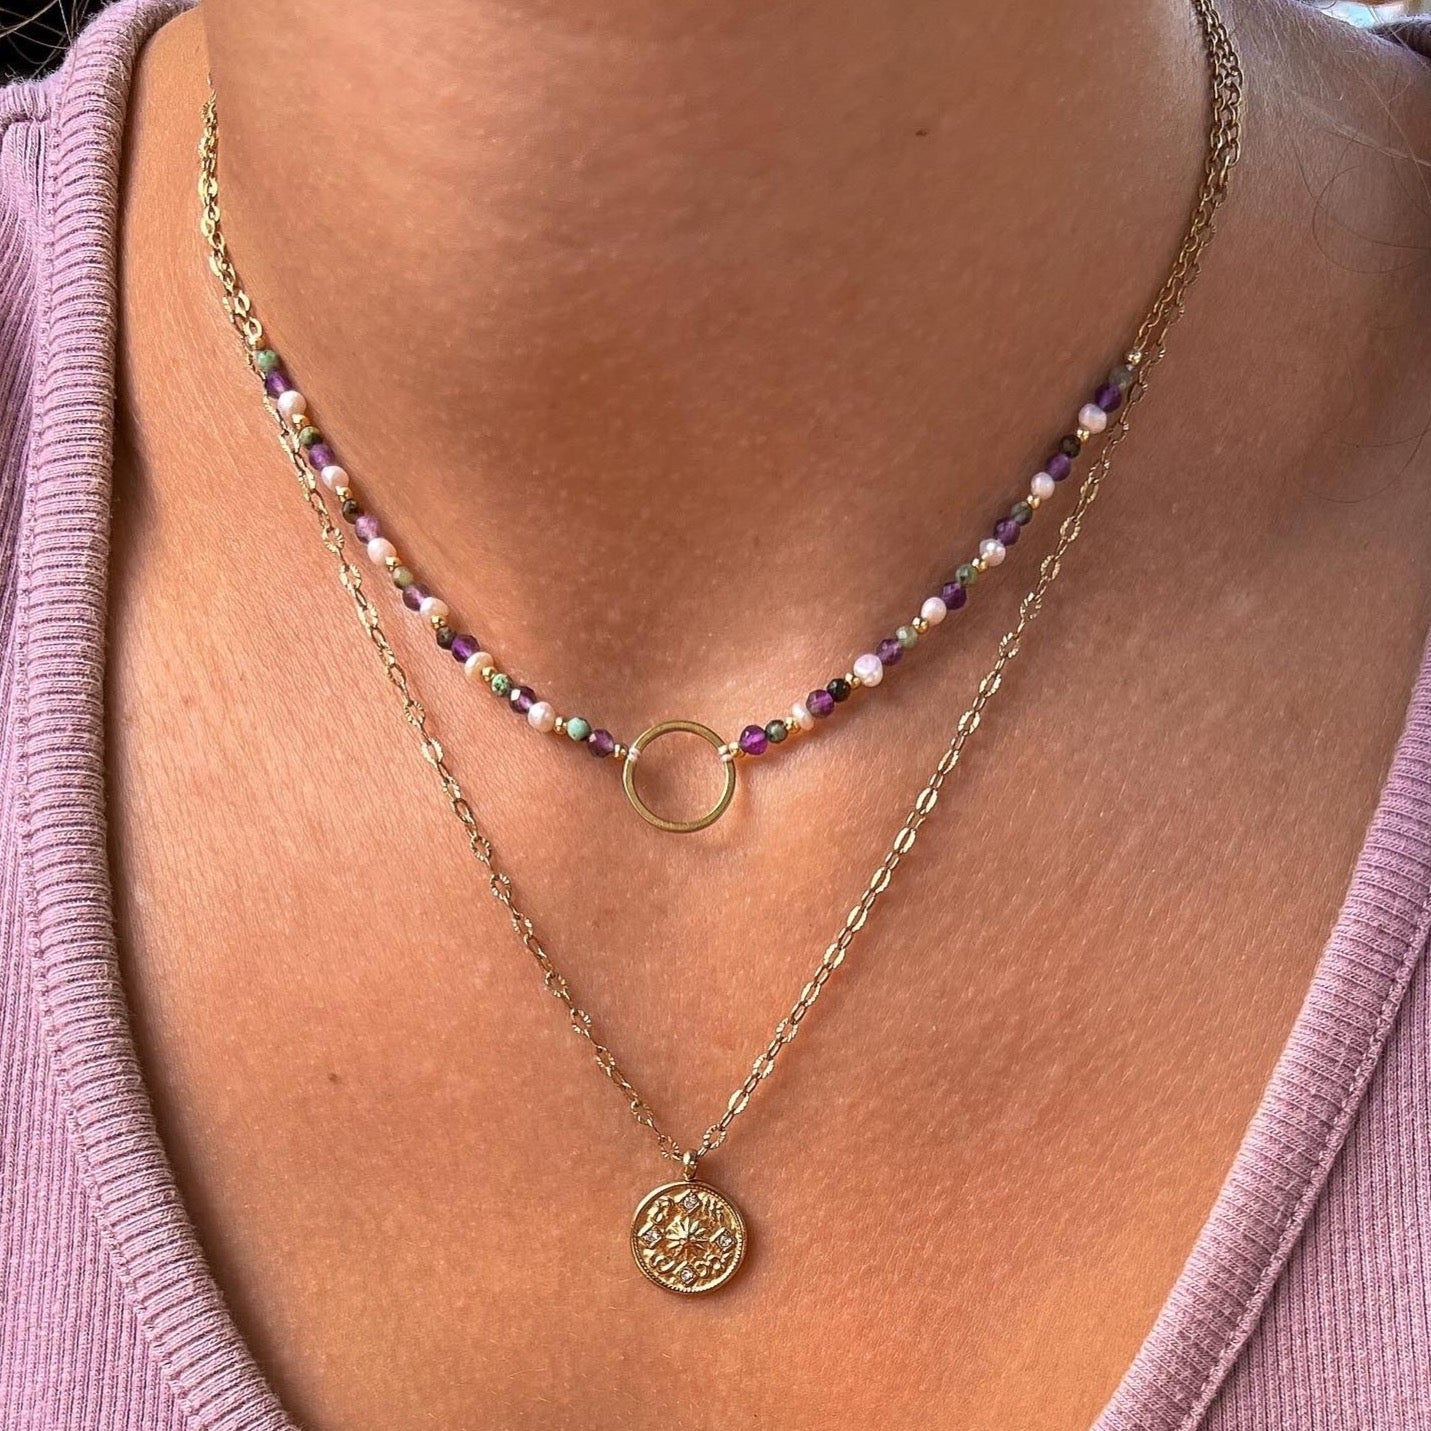 Amazonas necklace